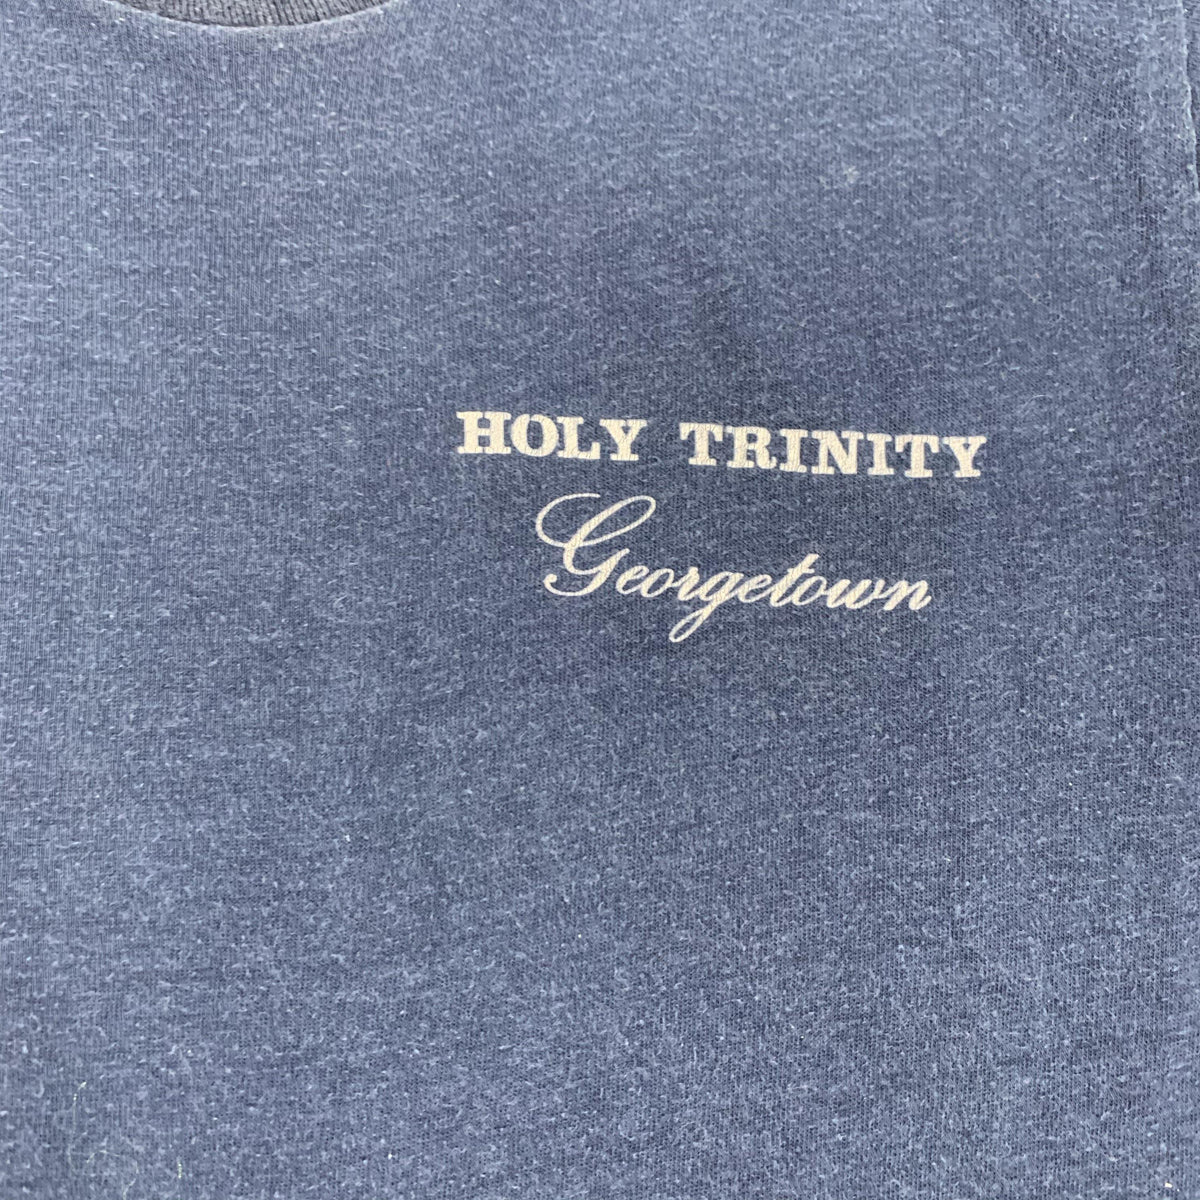 Vintage Holy Trinity “Georgetown” T-Shirt - jointcustodydc